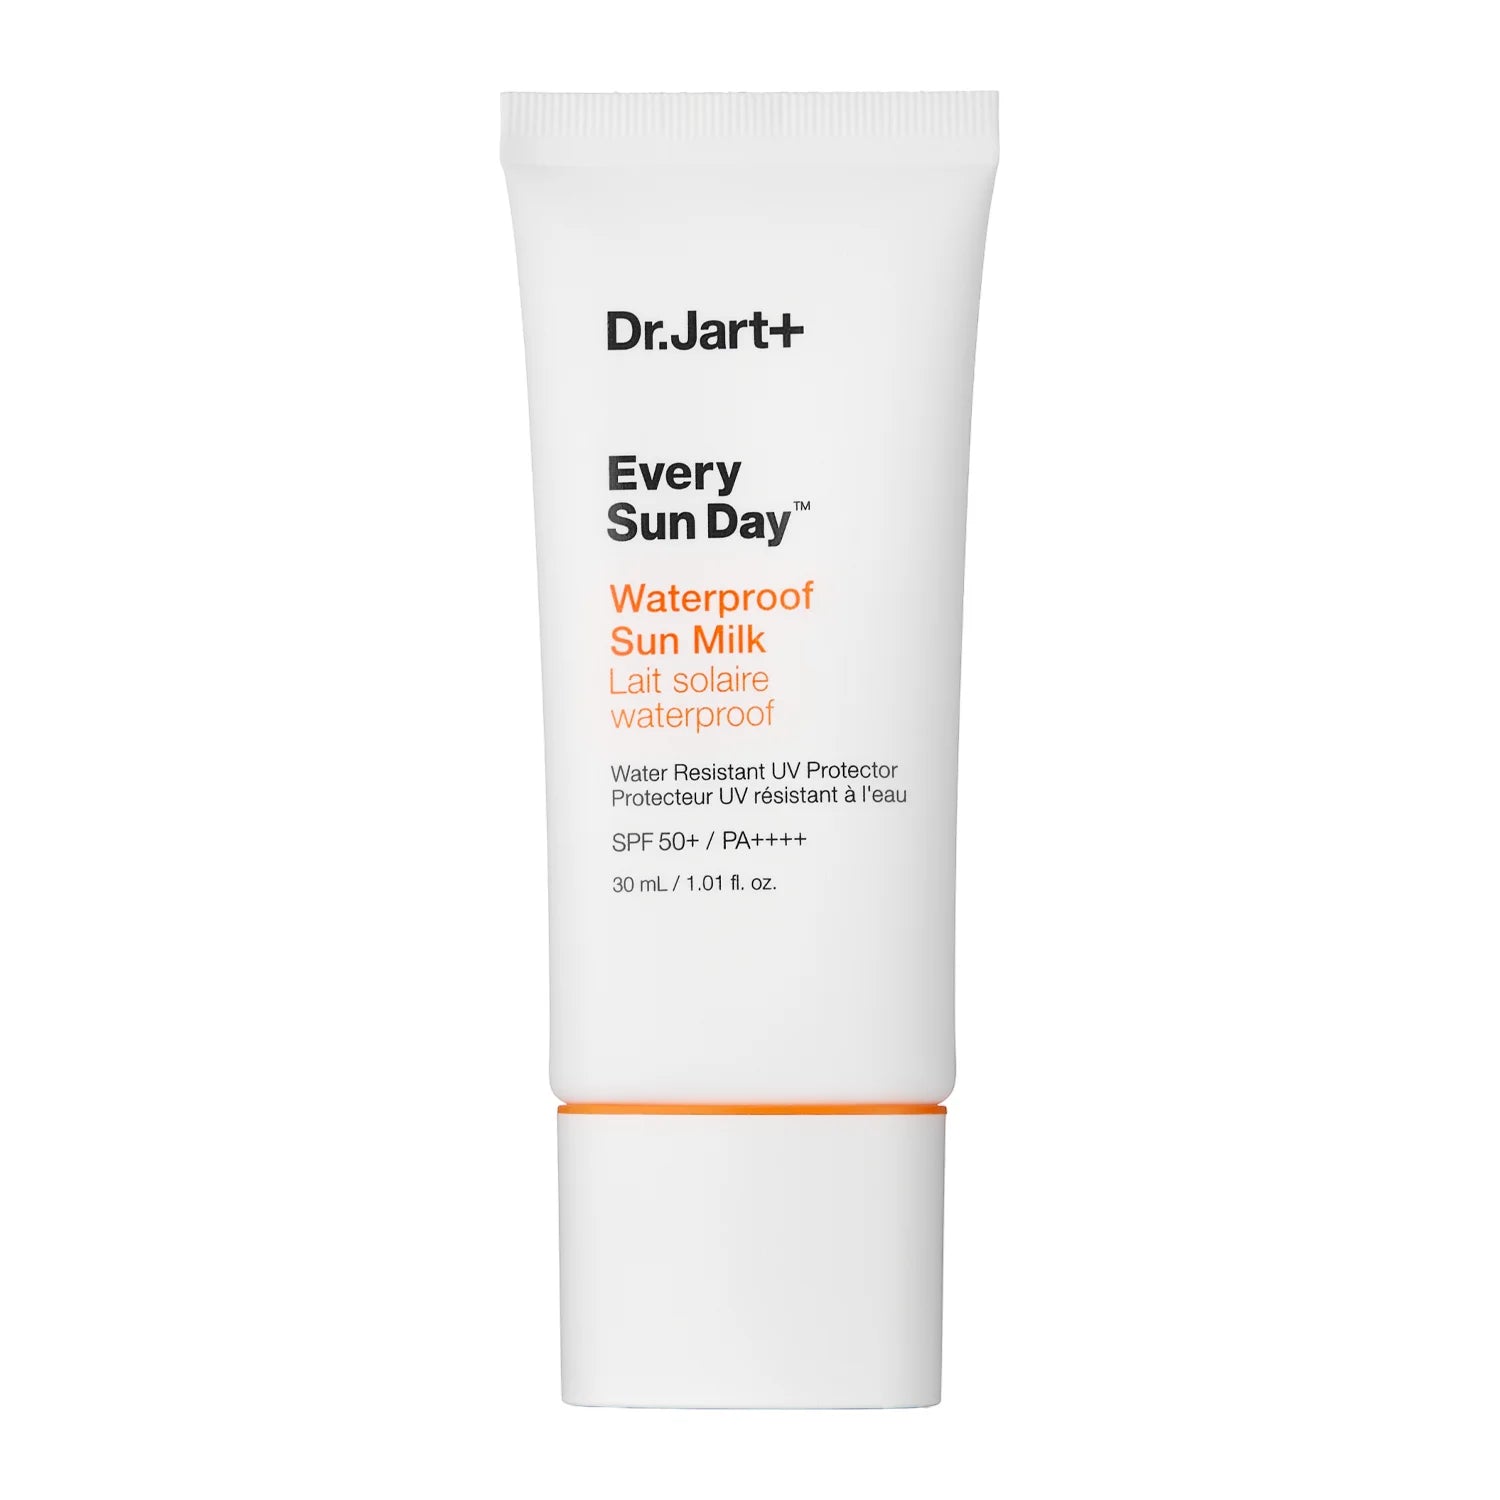 Dr.Jart+ - Every Sun Day Waterproof Sun Milk SPF50+/PA++++ - Waterproof Sunscreen Milk - 30ml